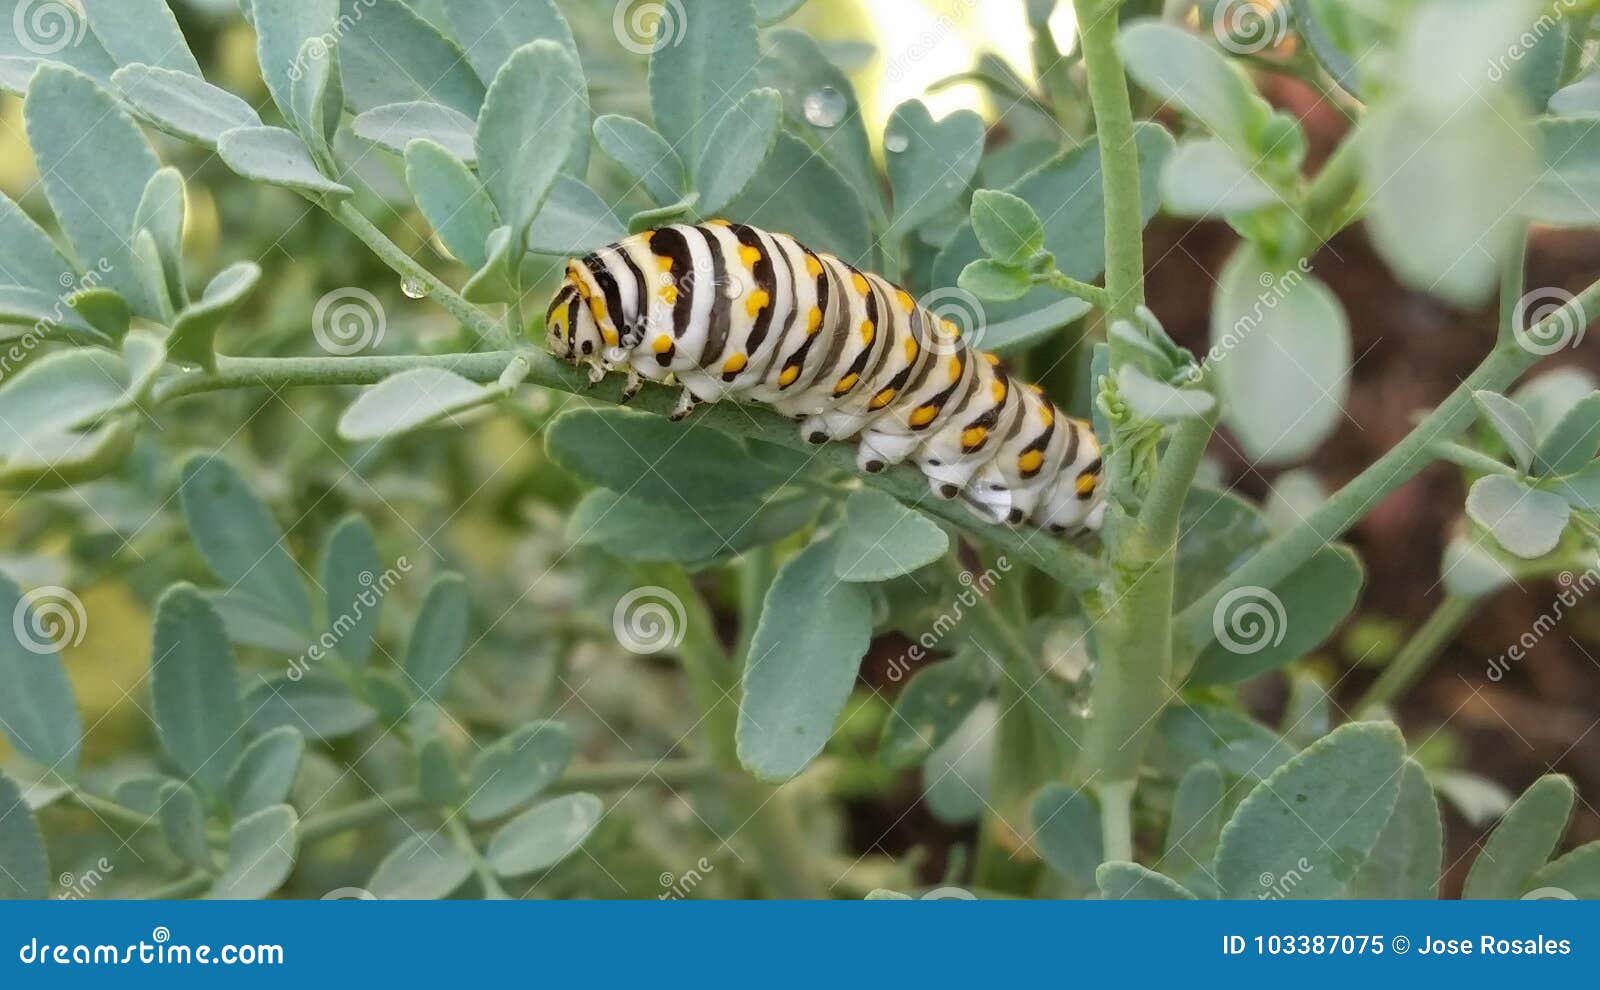 striped caterpillar papilio macaon.